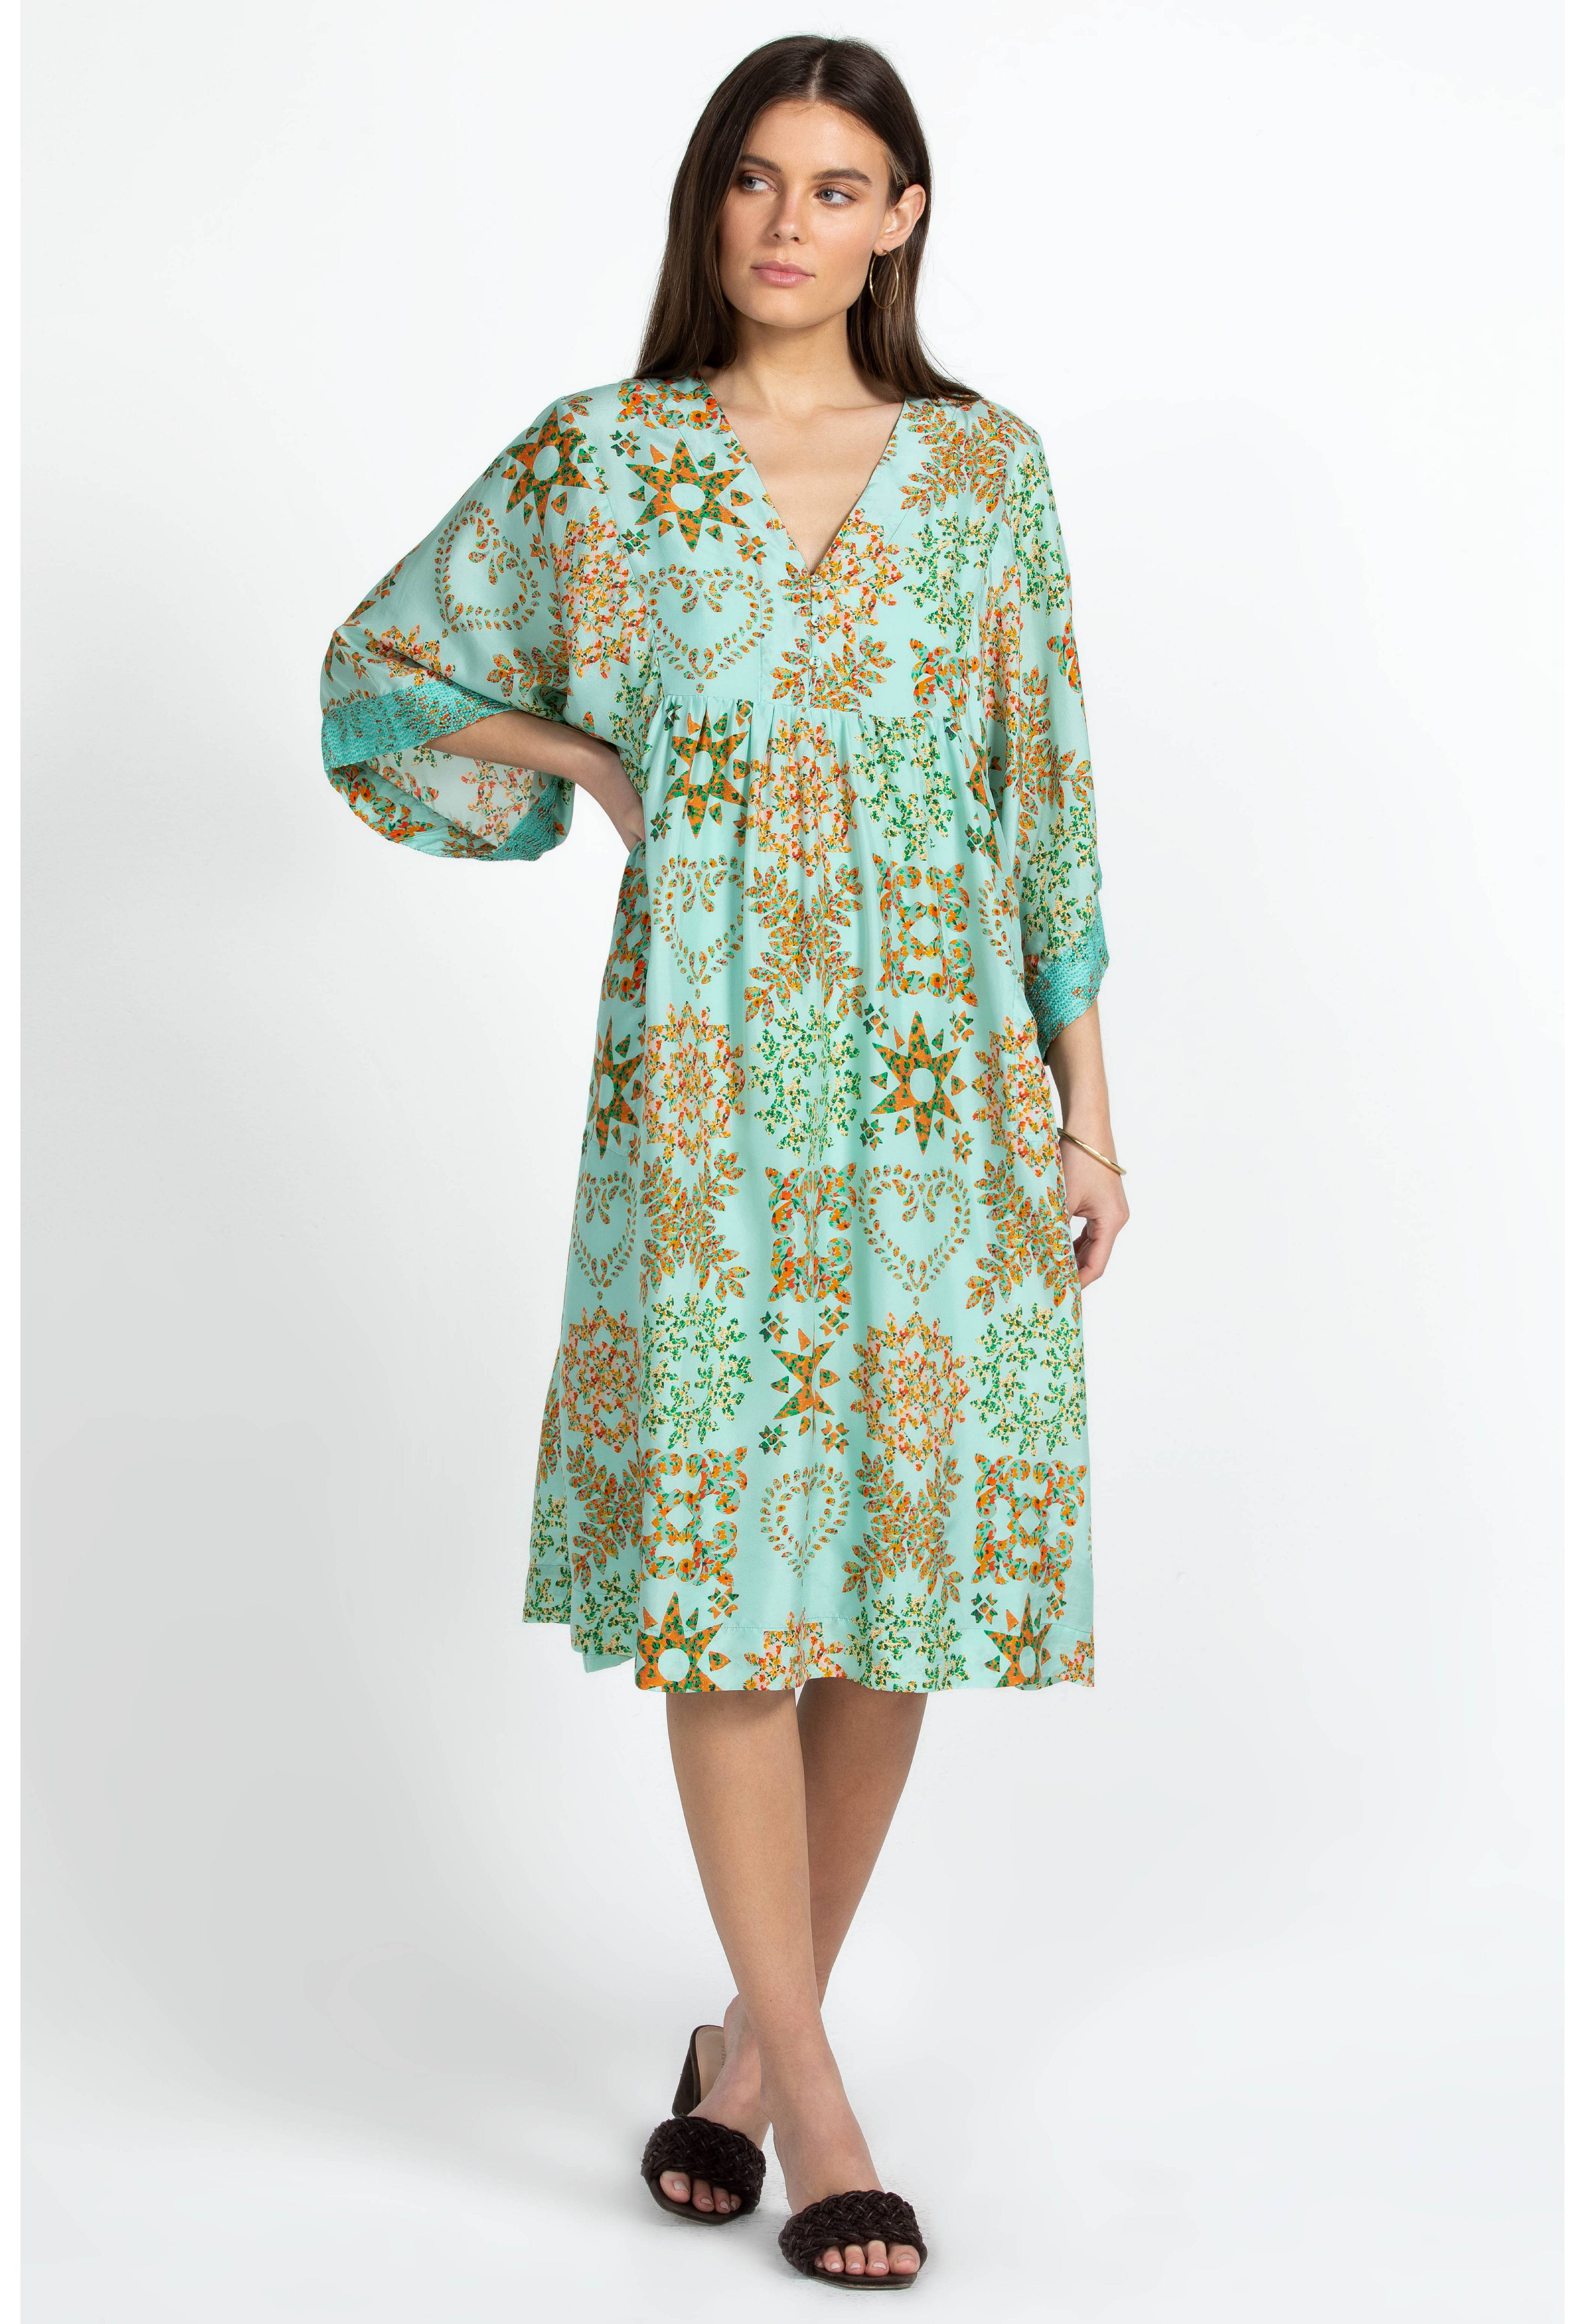 Corbetta Kimono Dress, , large image number 1